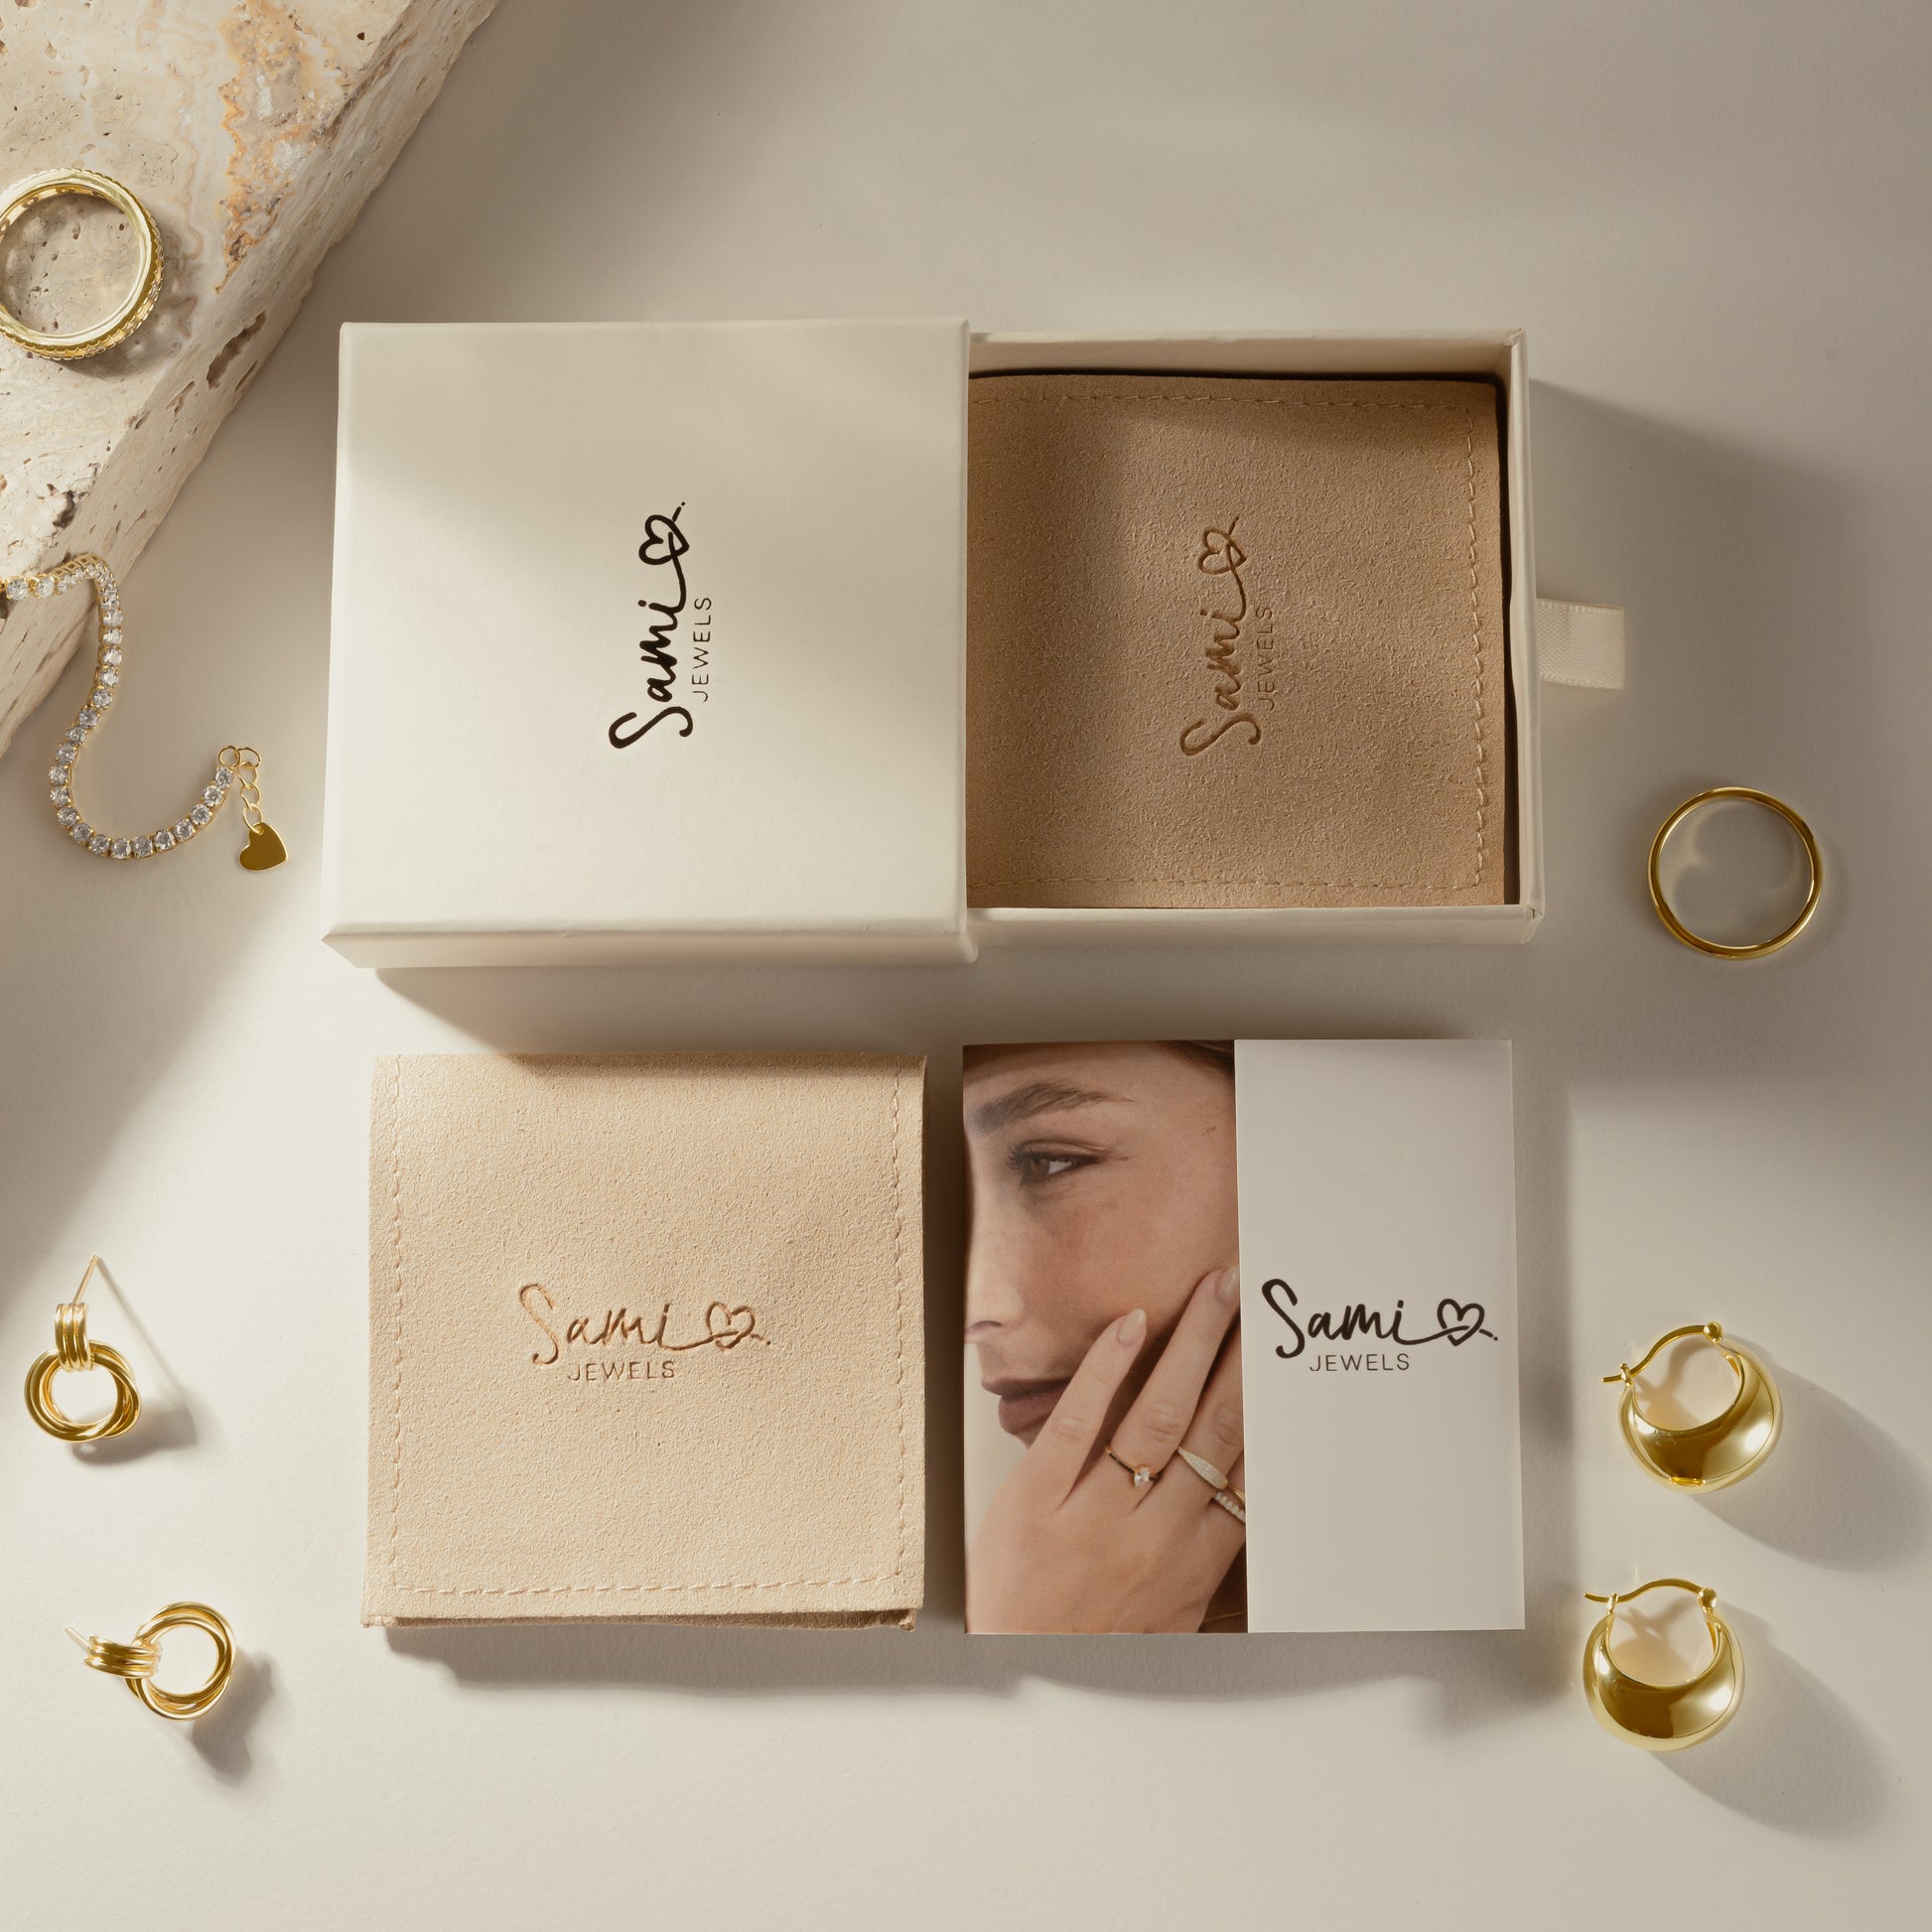 Sami Jewels Packaging 